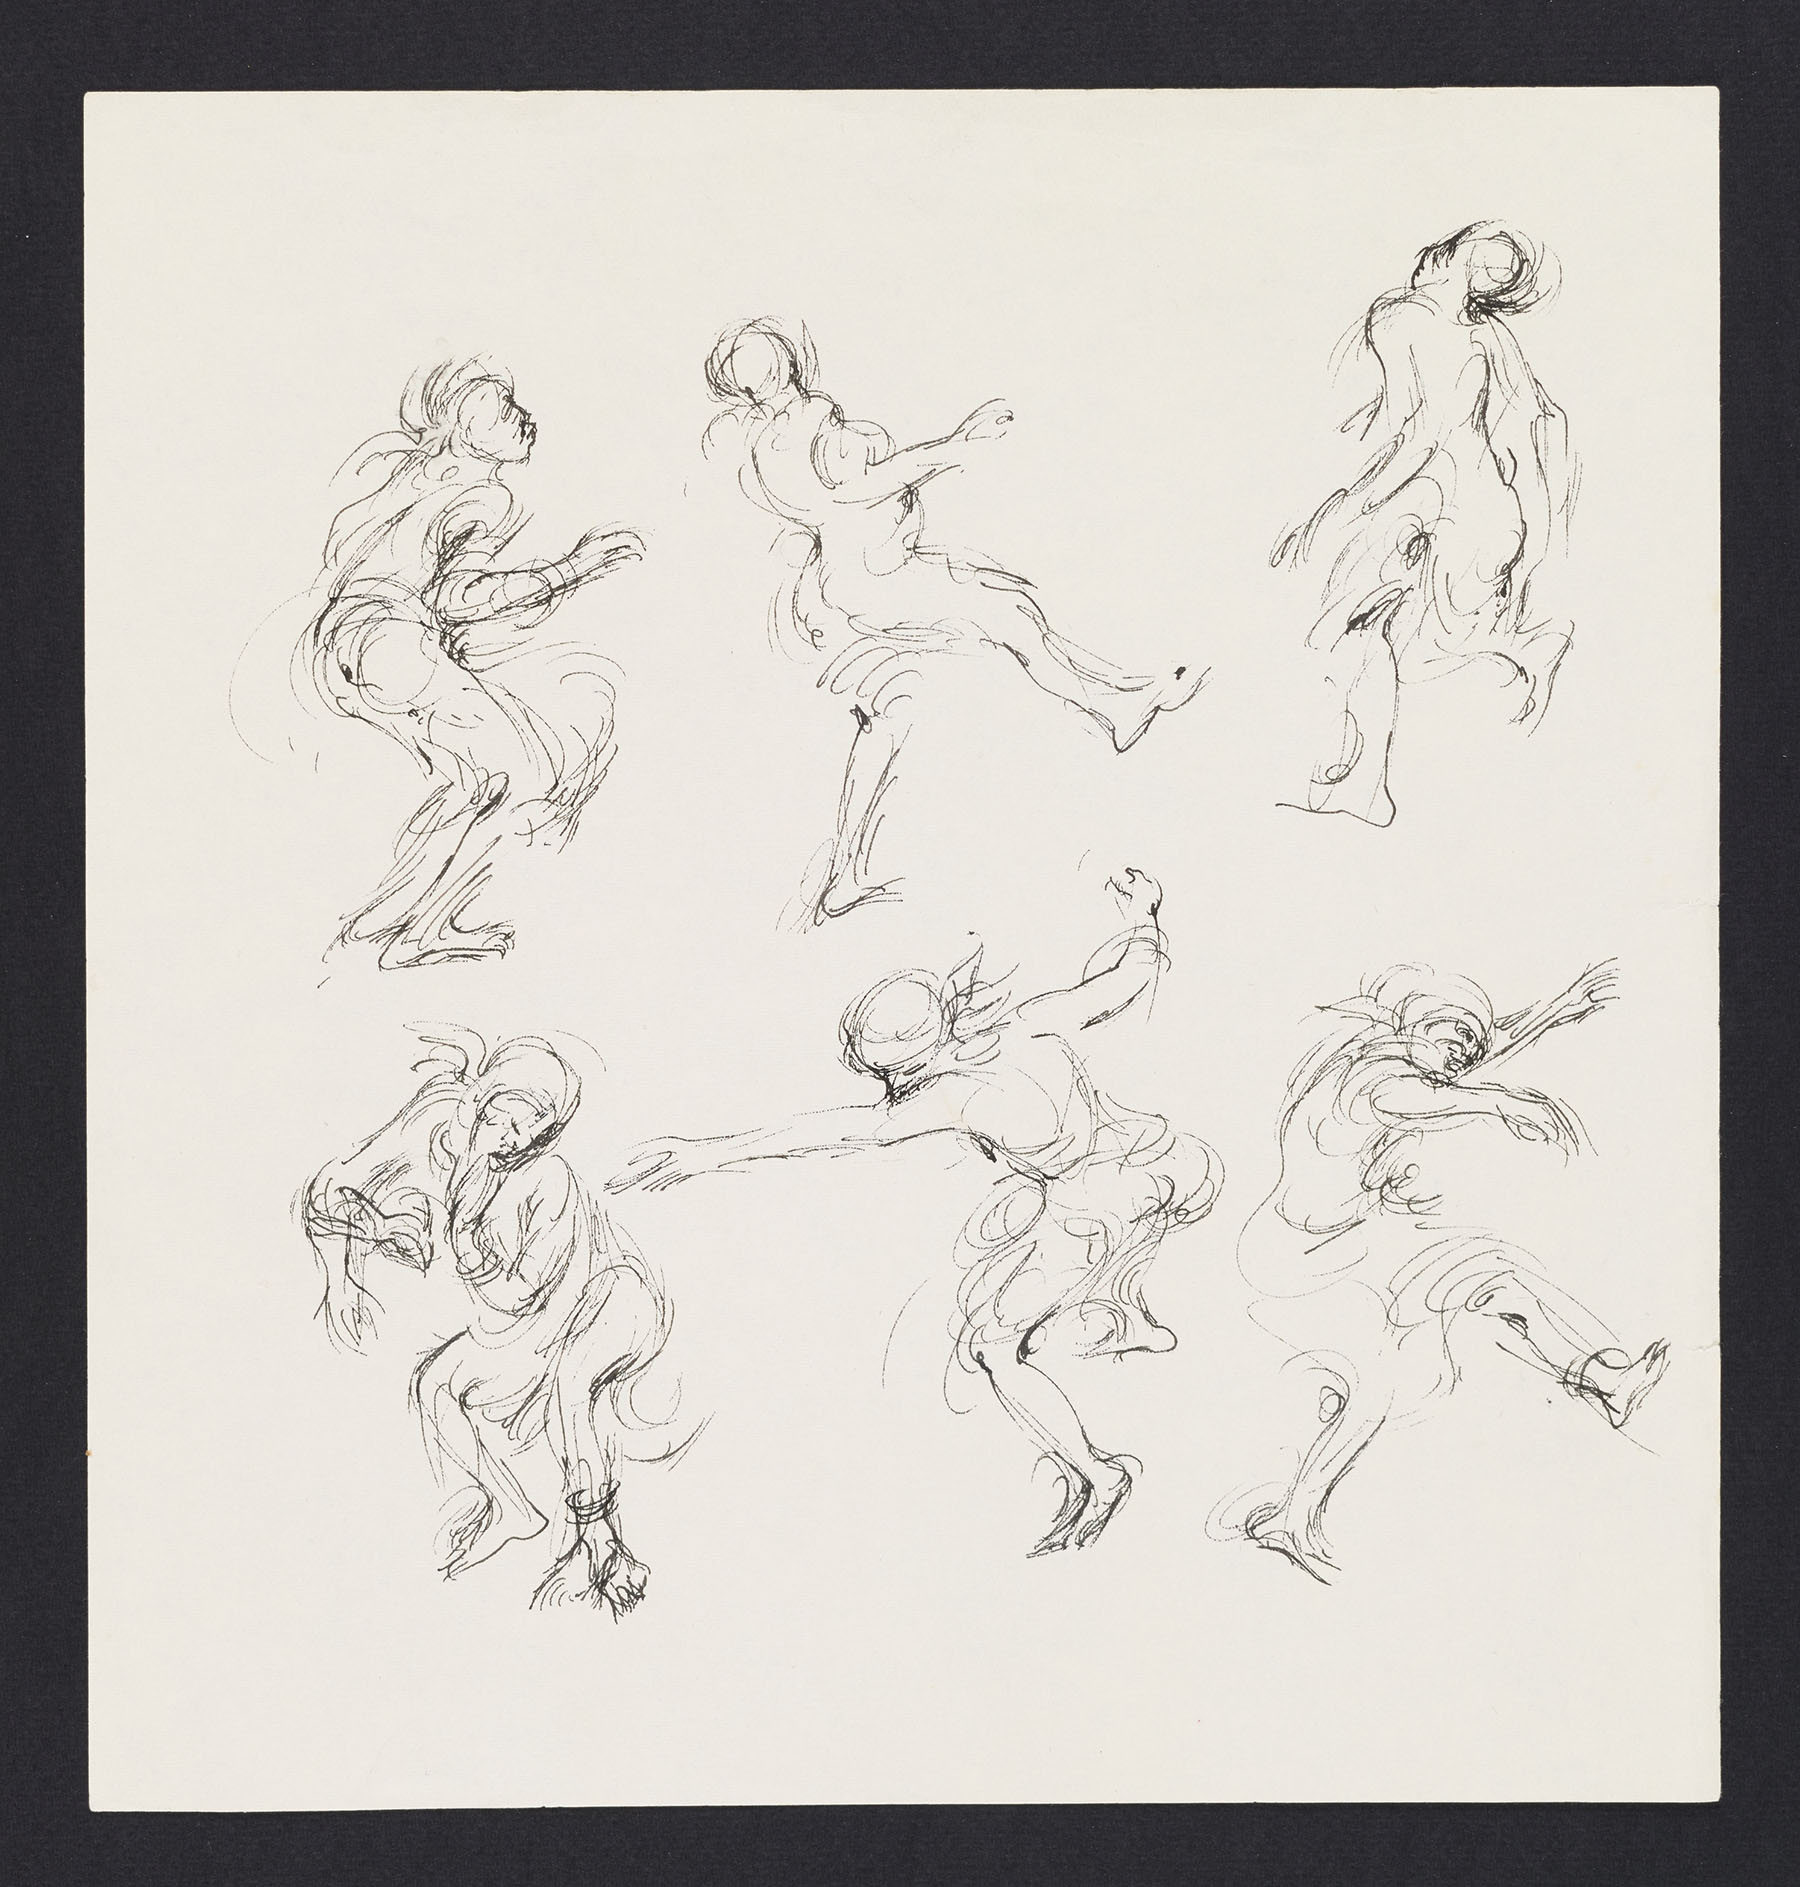 Preparatory studies for The Dancing Granny (New York: Atheneum, 1977)